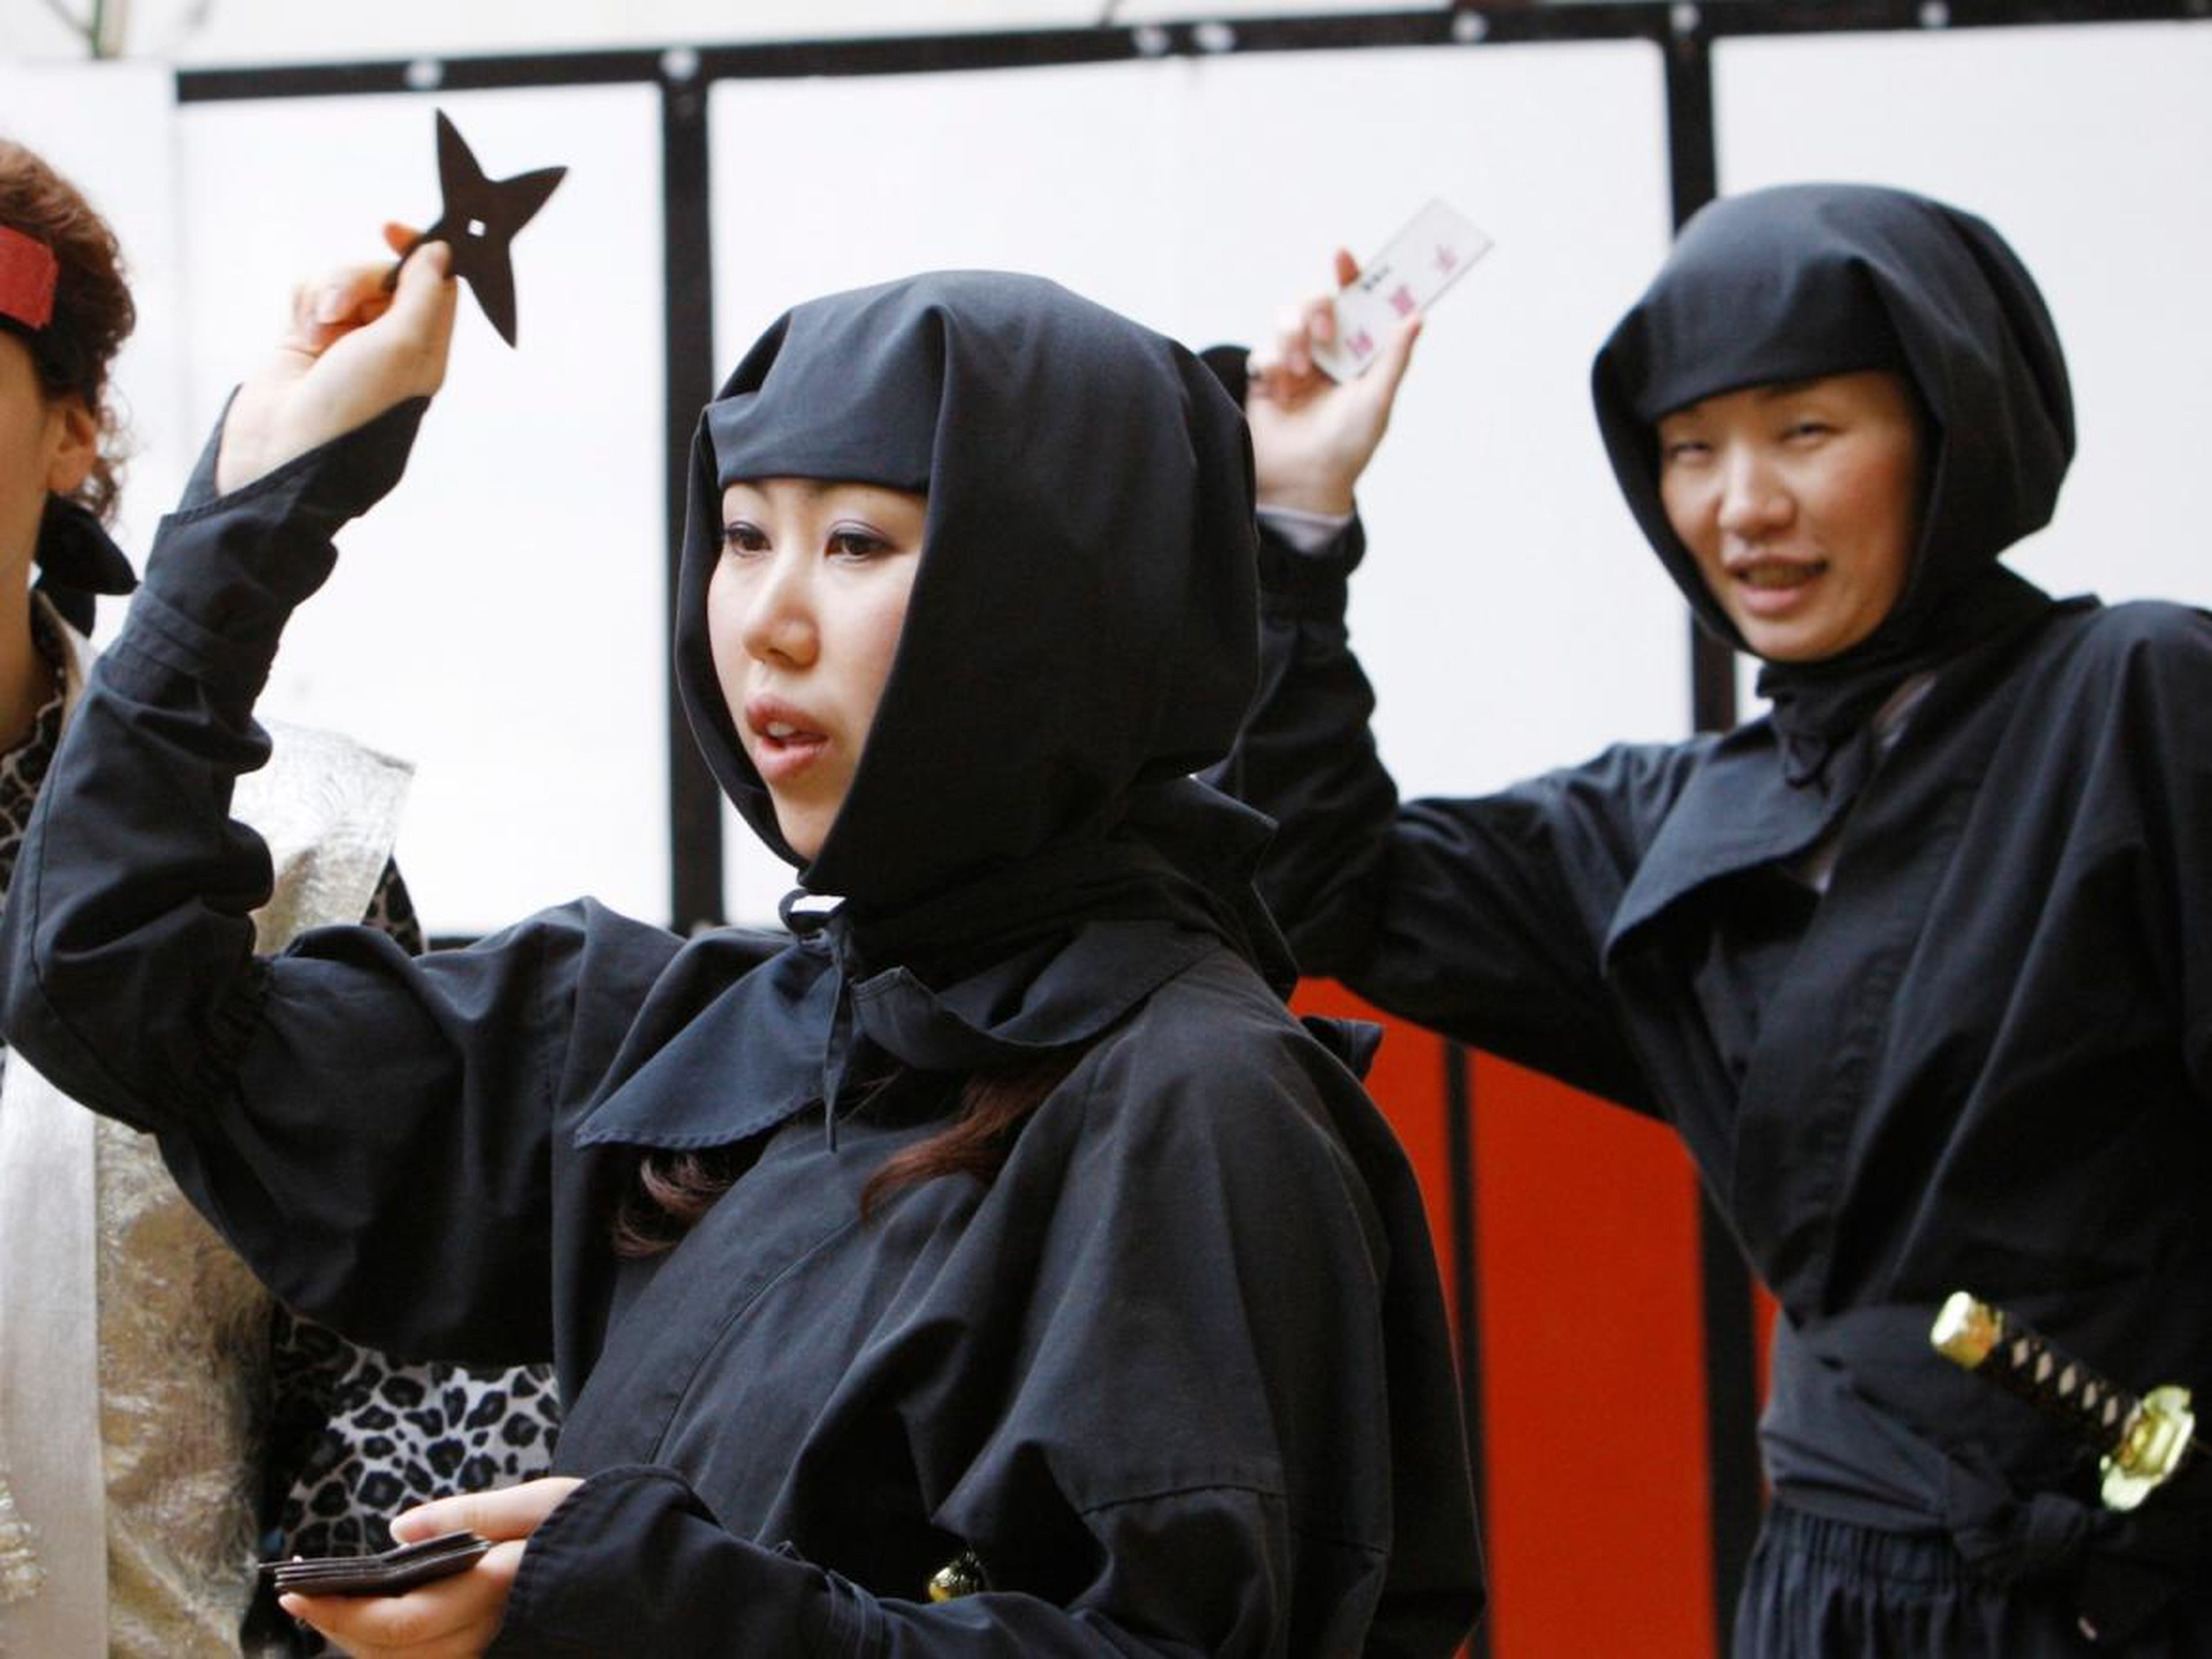 Women dressed as ninjas throwing "shuriken" during a ninja festival in Iga.